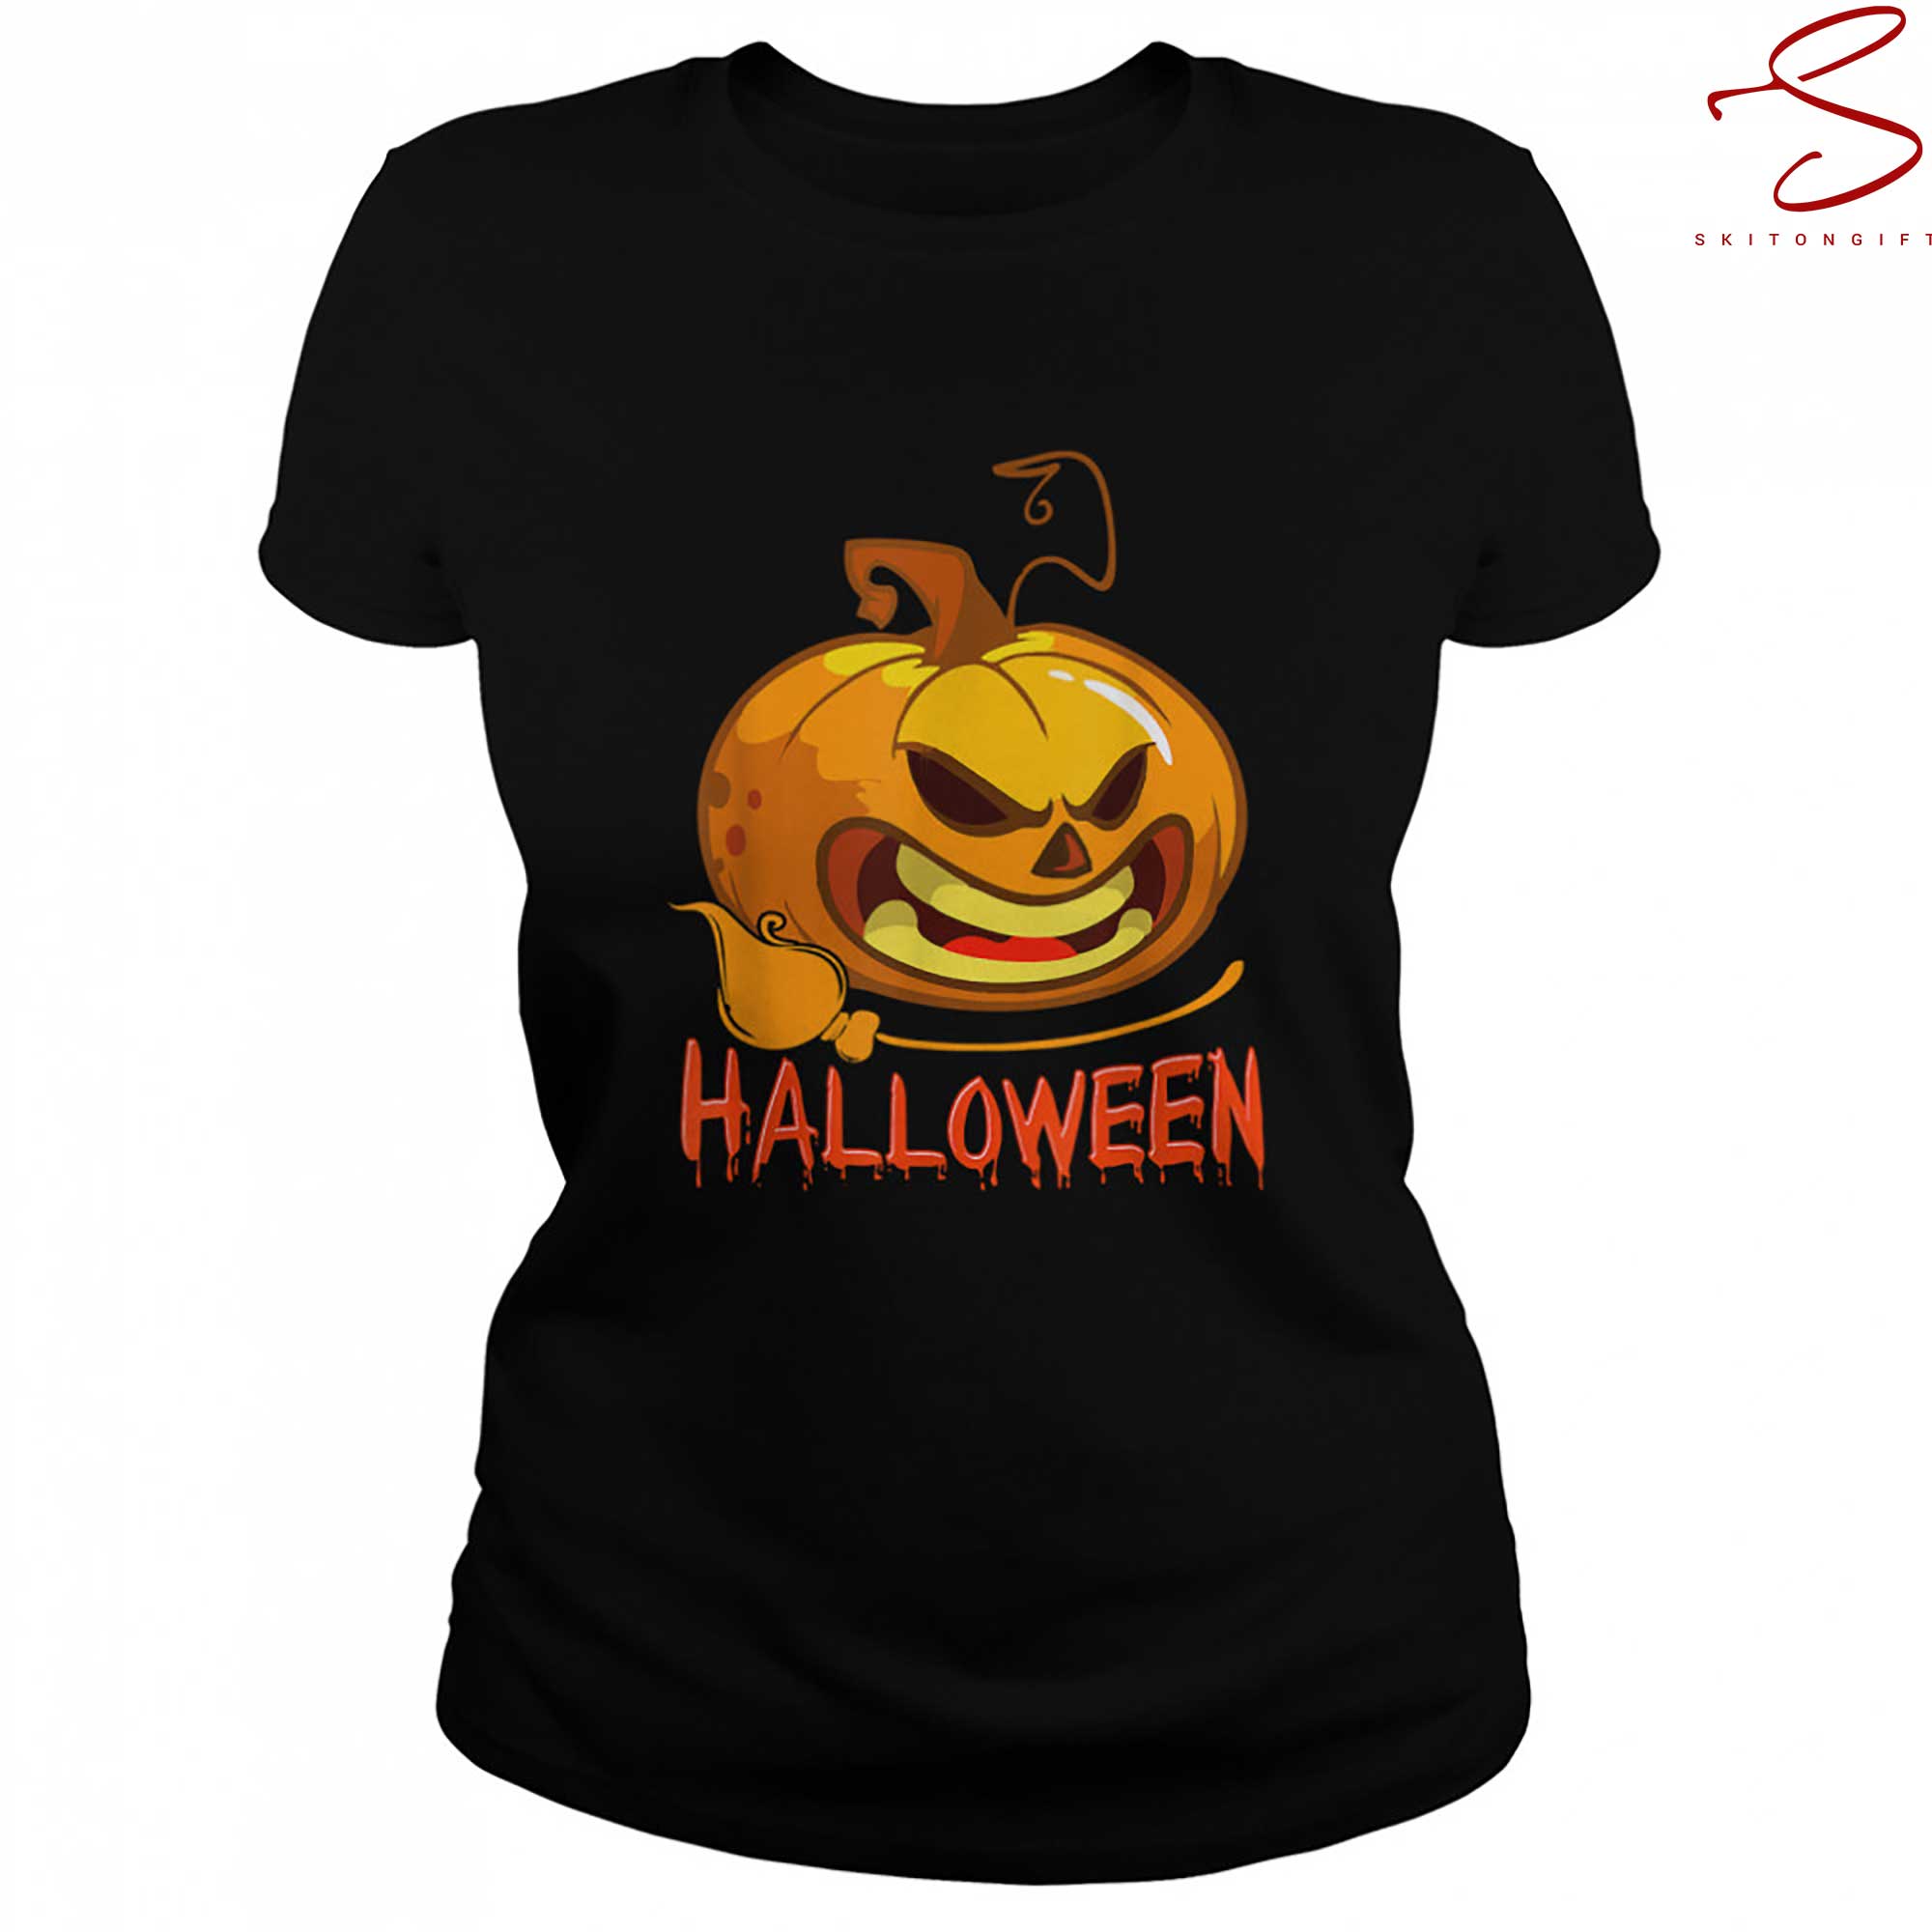 Skitongift Halloween Pumpkin Witch Shirt Scary Happy Halloween T Shirt